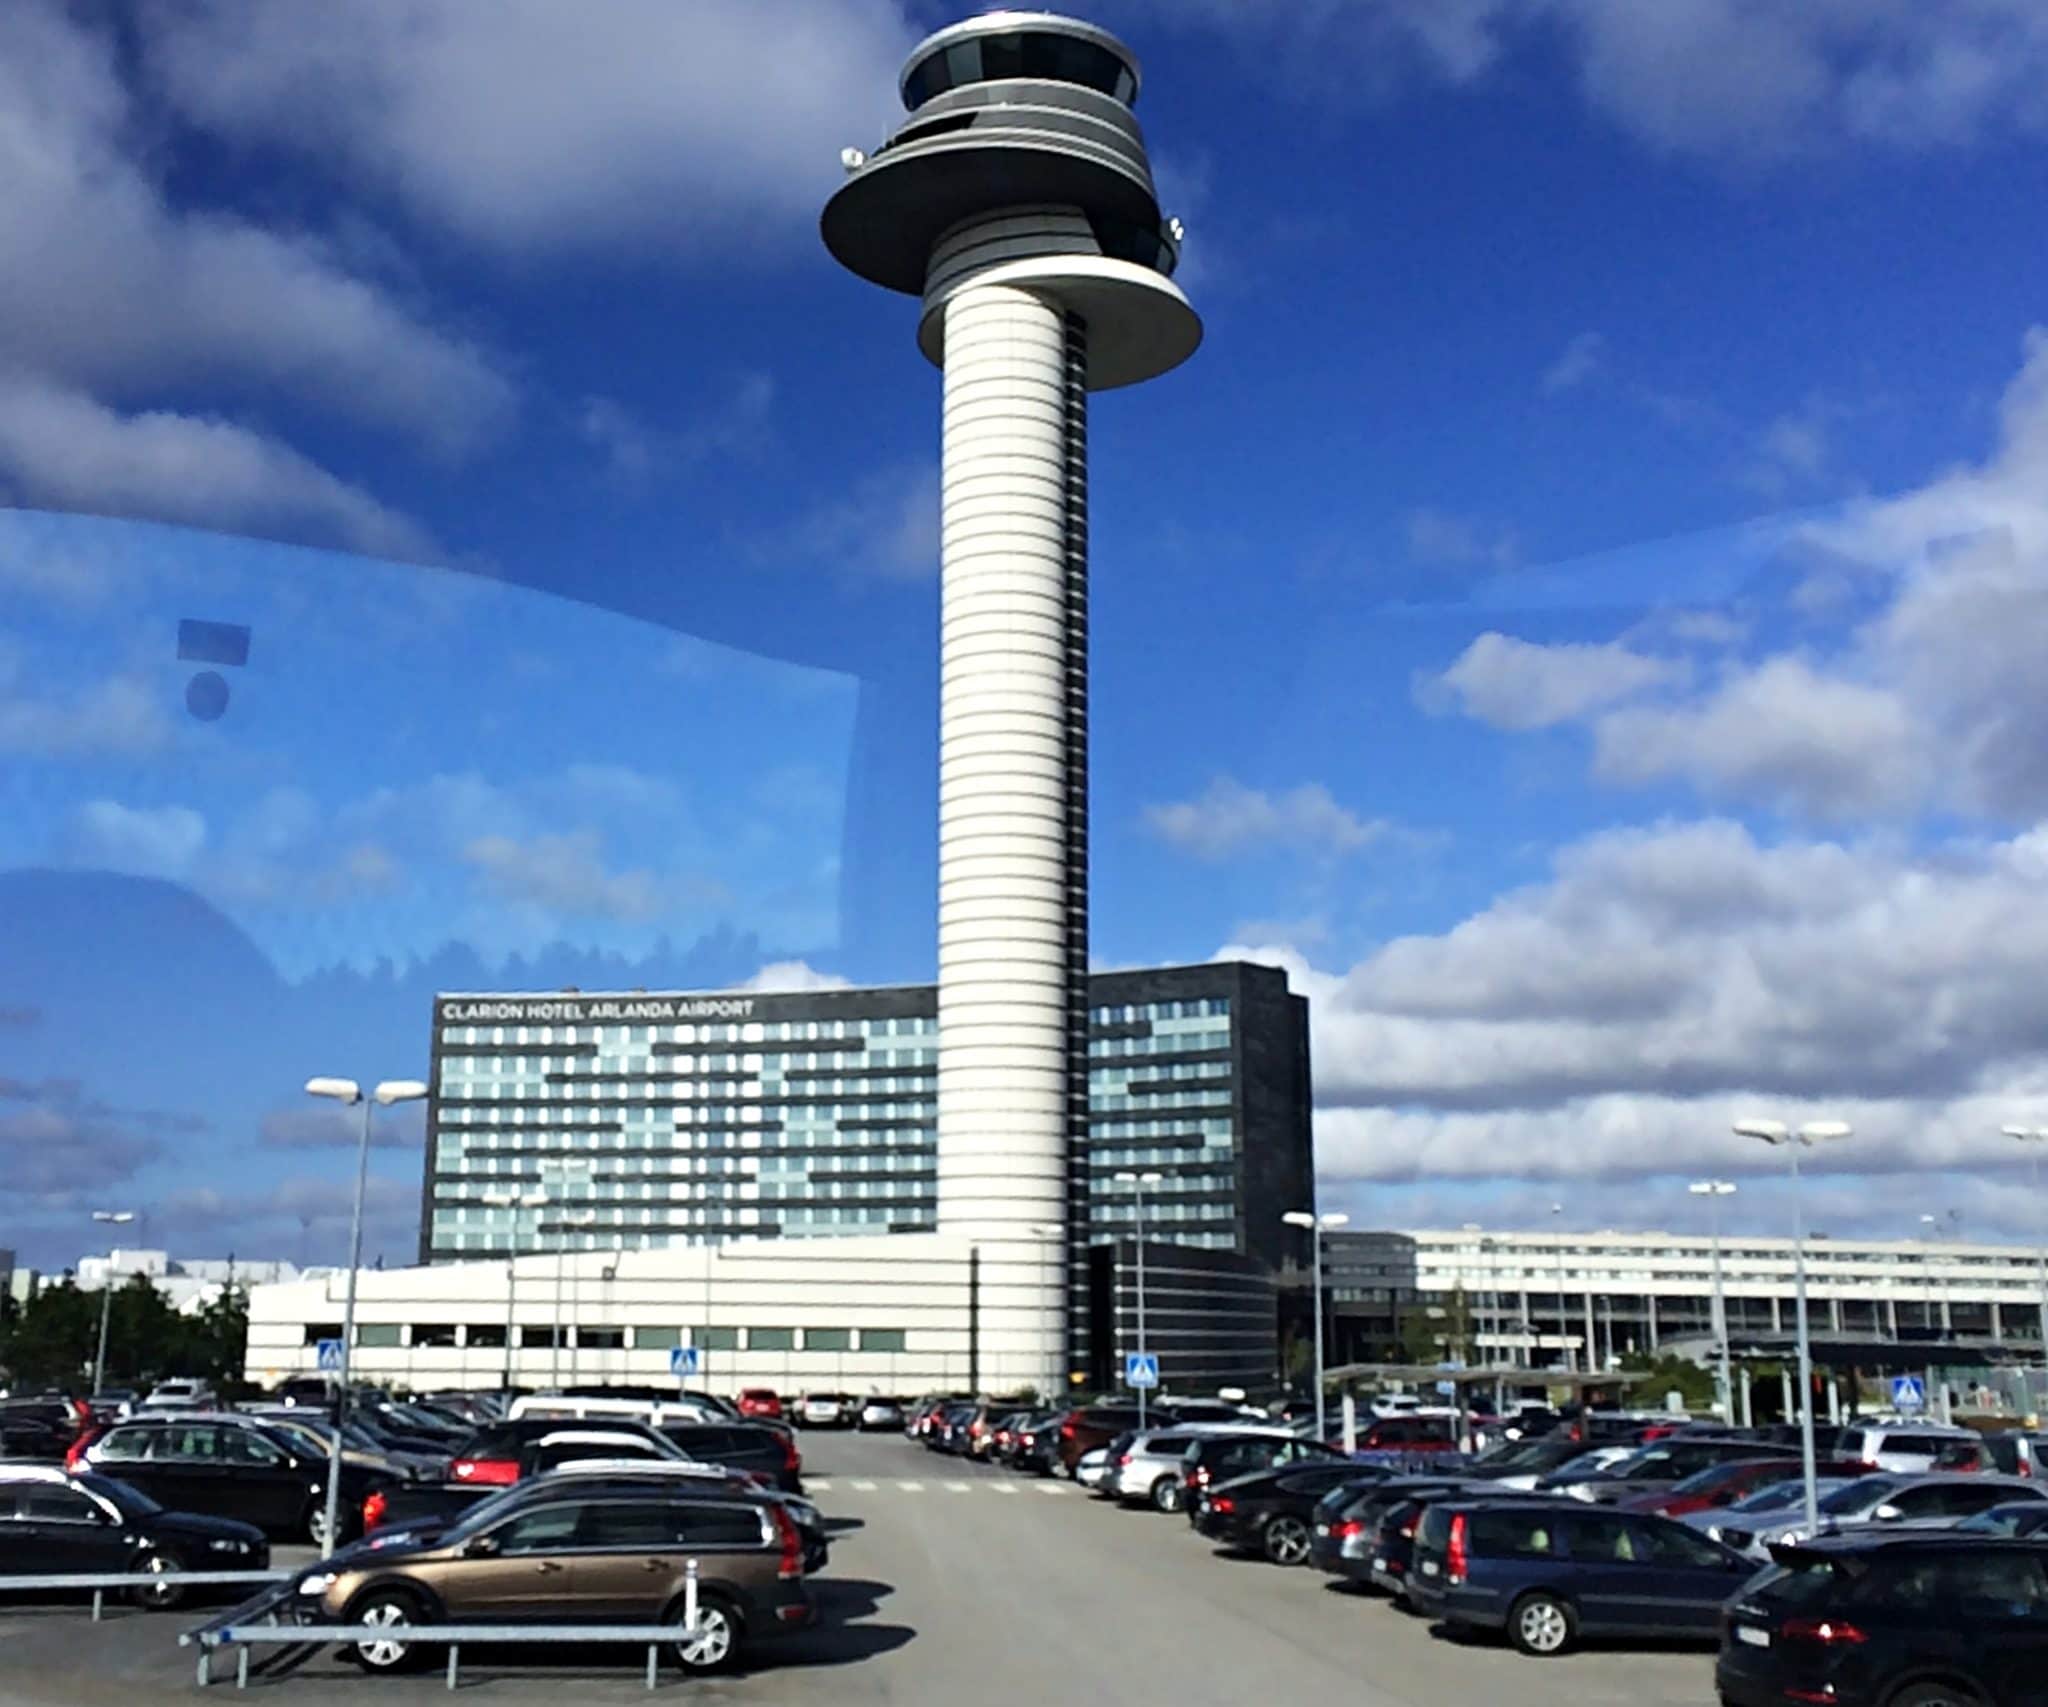 Flying From Stockholm Arlanda Airport